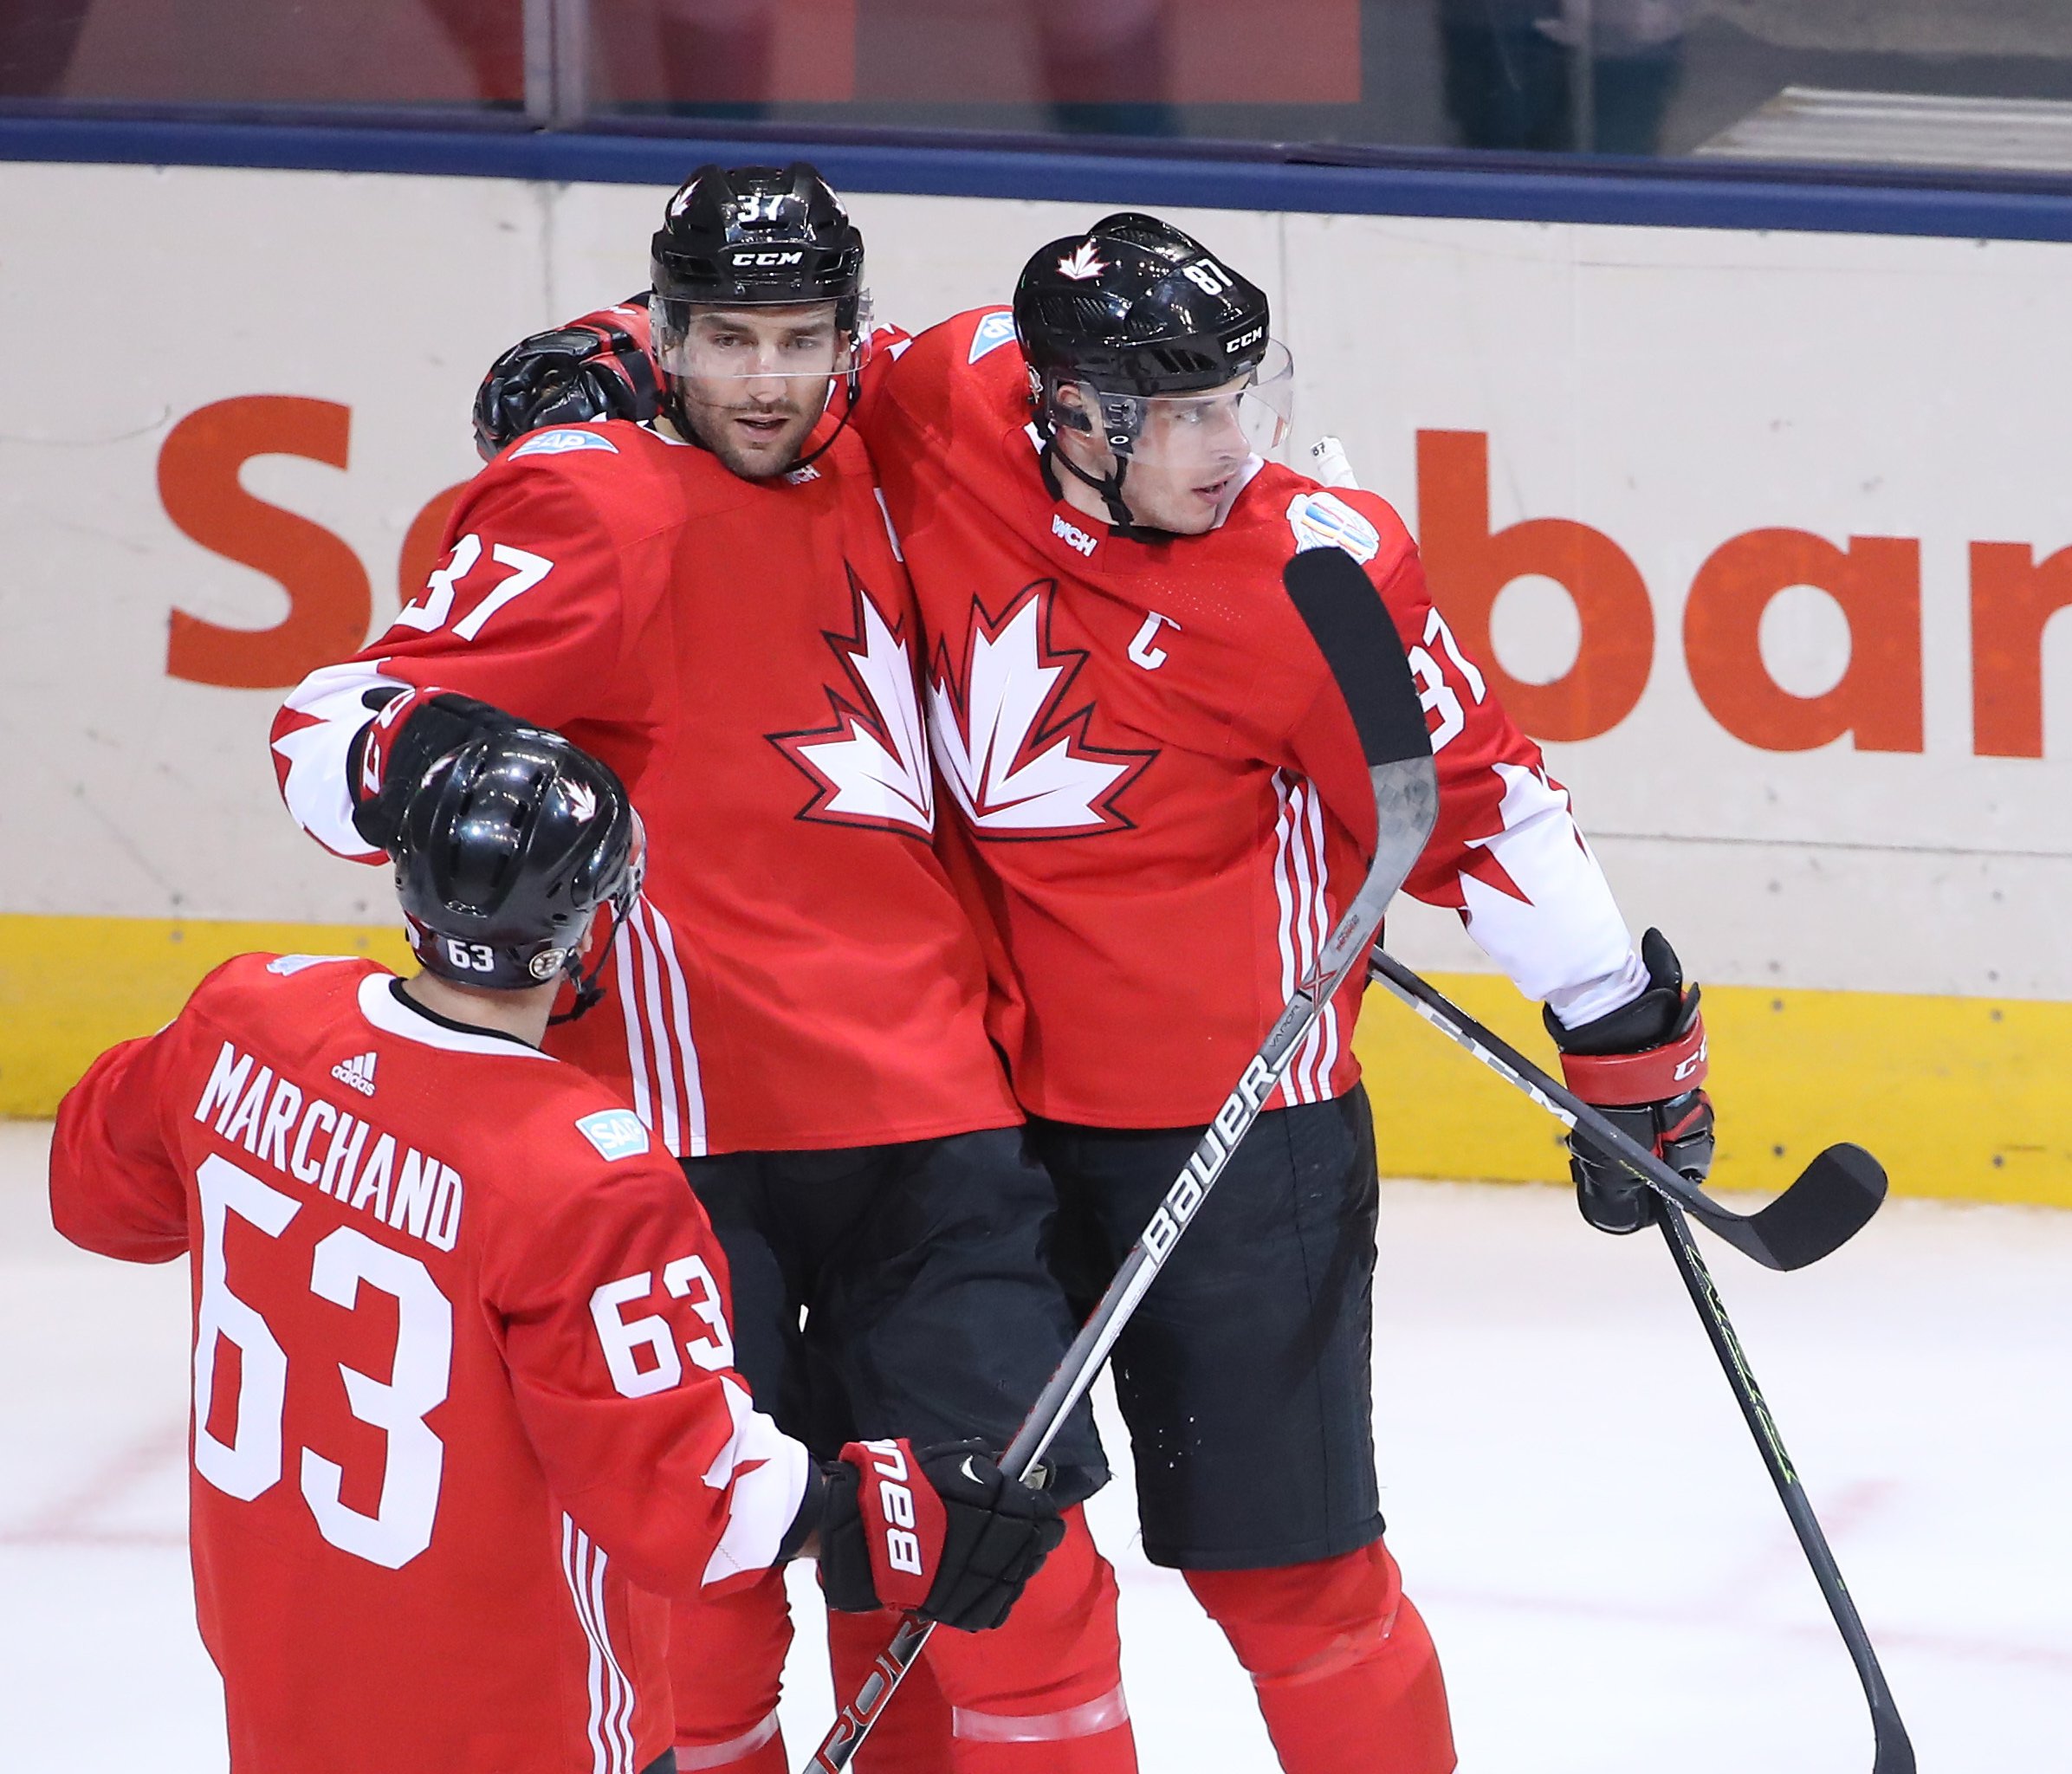 Canada Names Men's 2022 Olympic Hockey Roster - The Hockey News